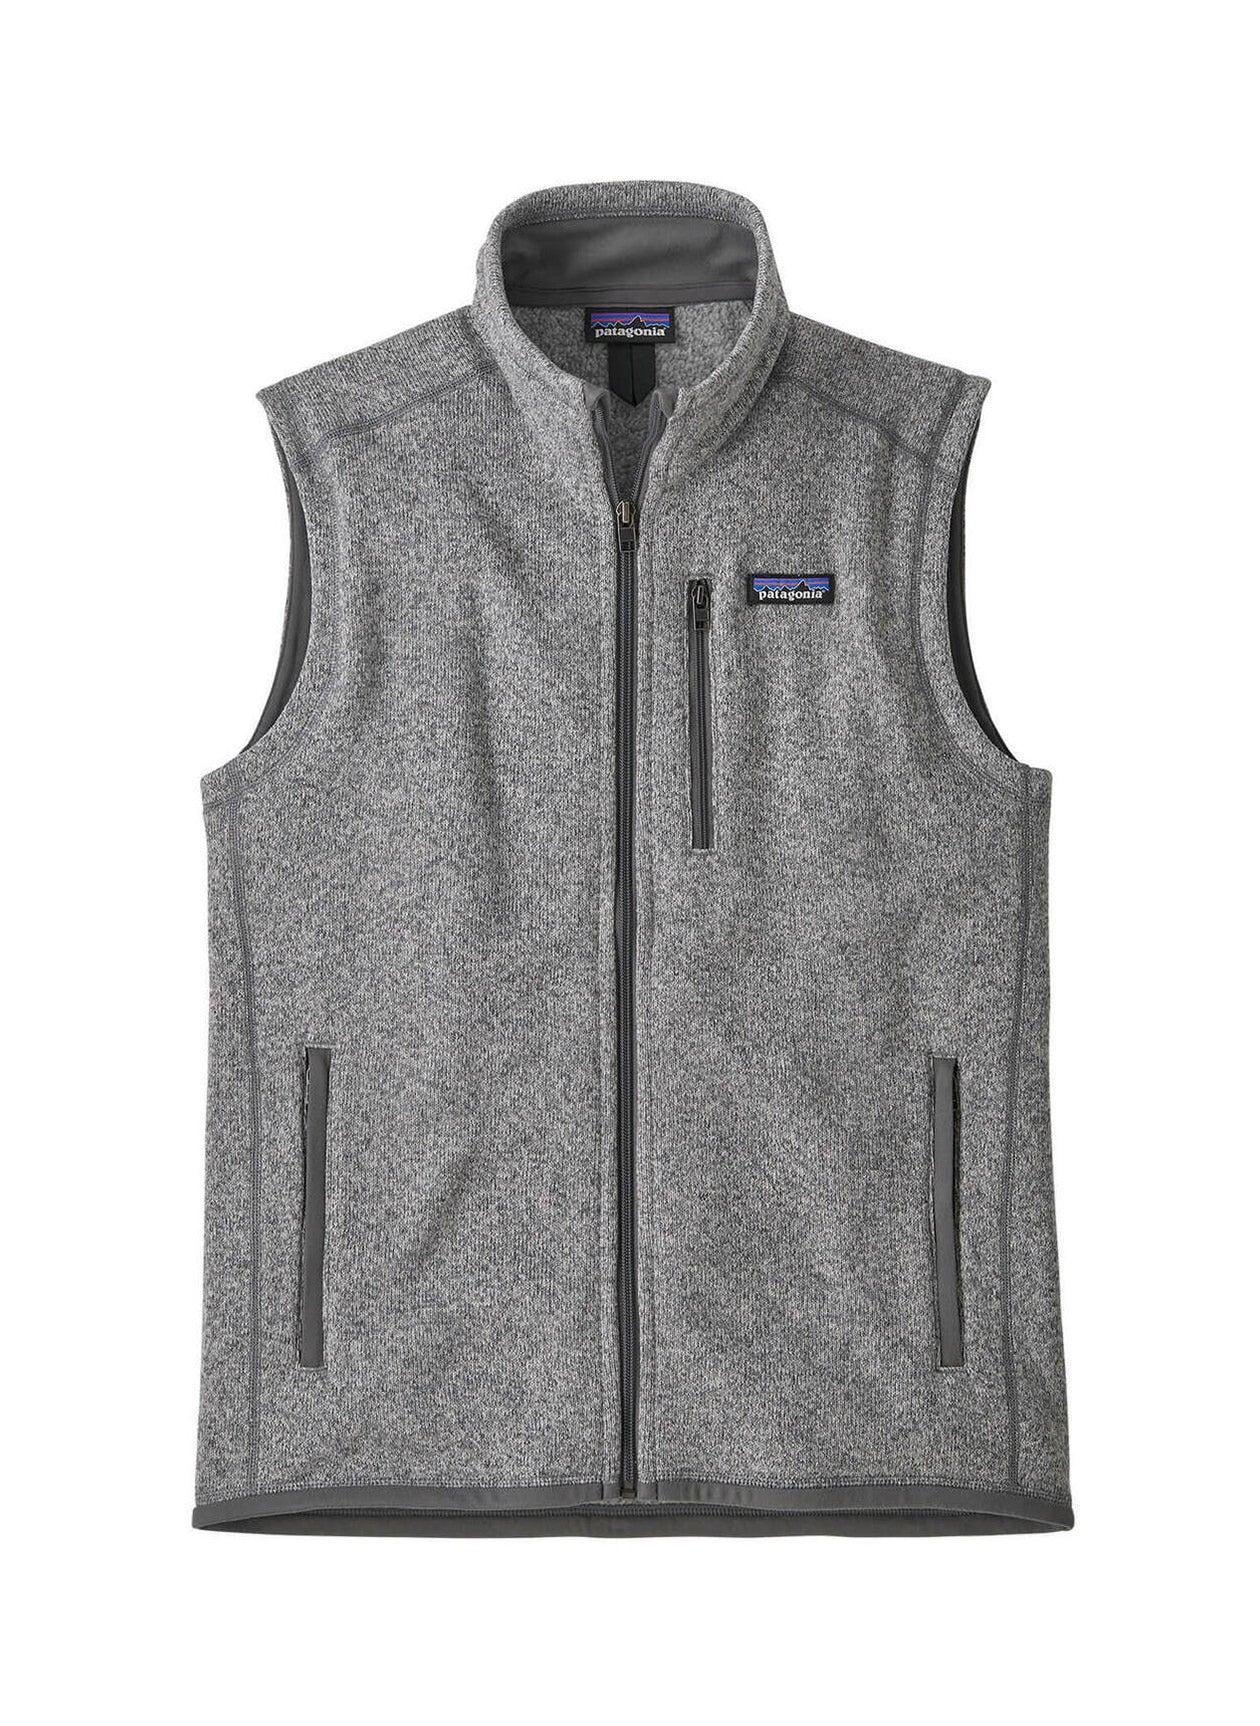 Patagonia Men's Better Sweater Vest w/ CMC logo